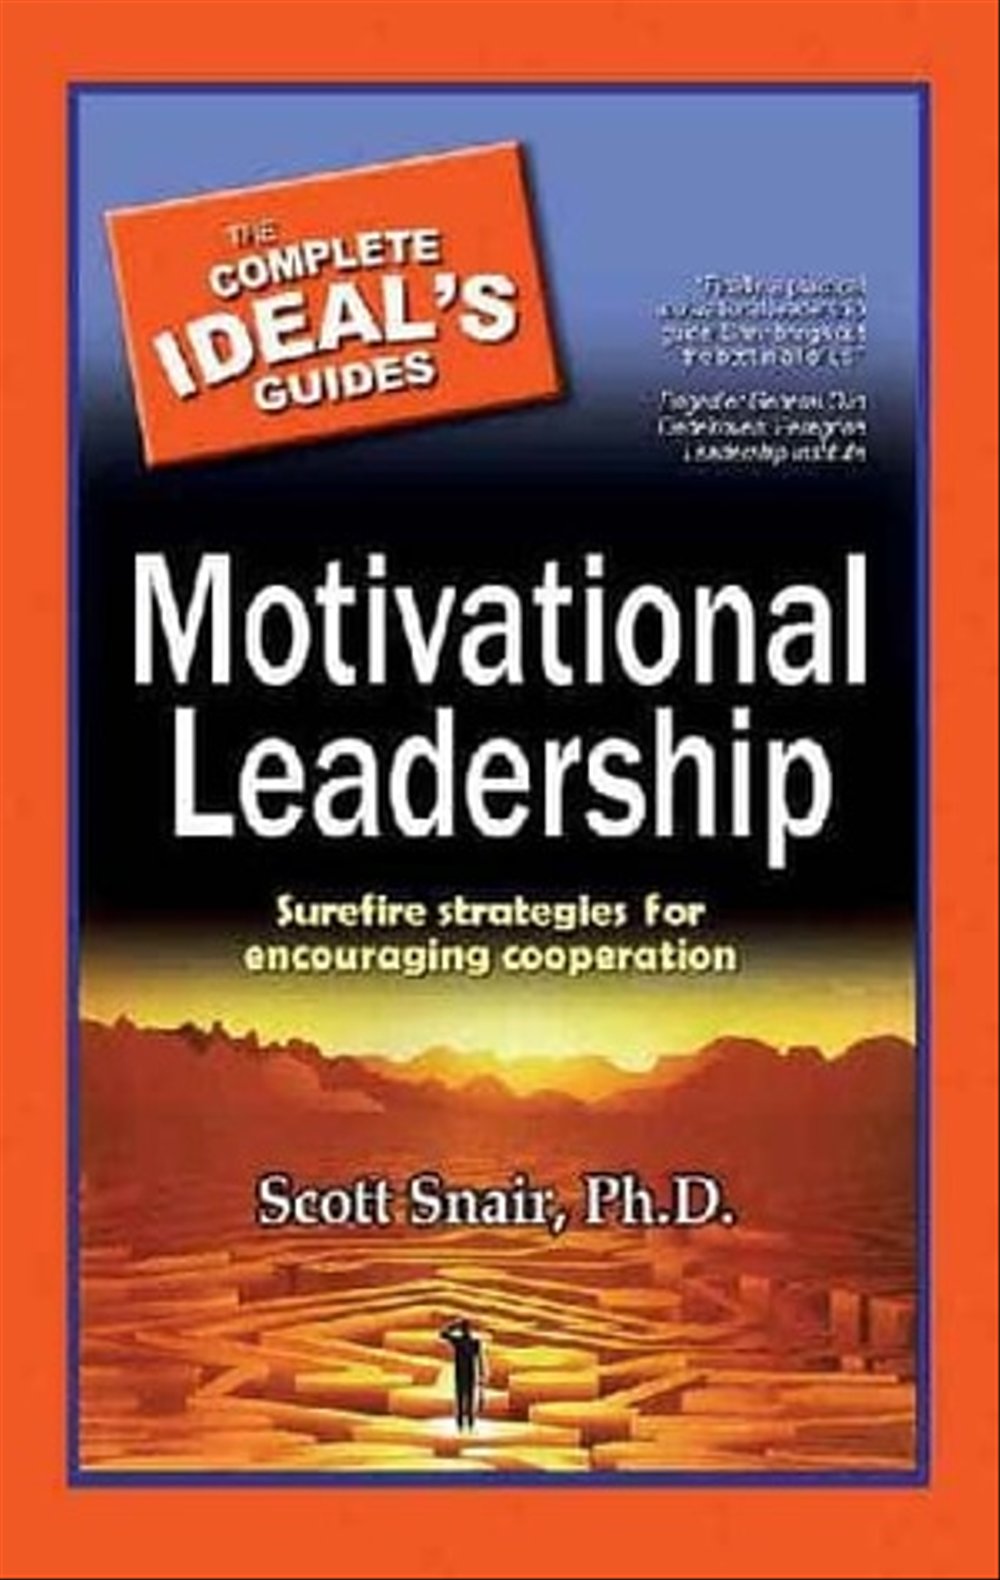 Motivational Leadership :  Surefire strategies for encouraging cooperation